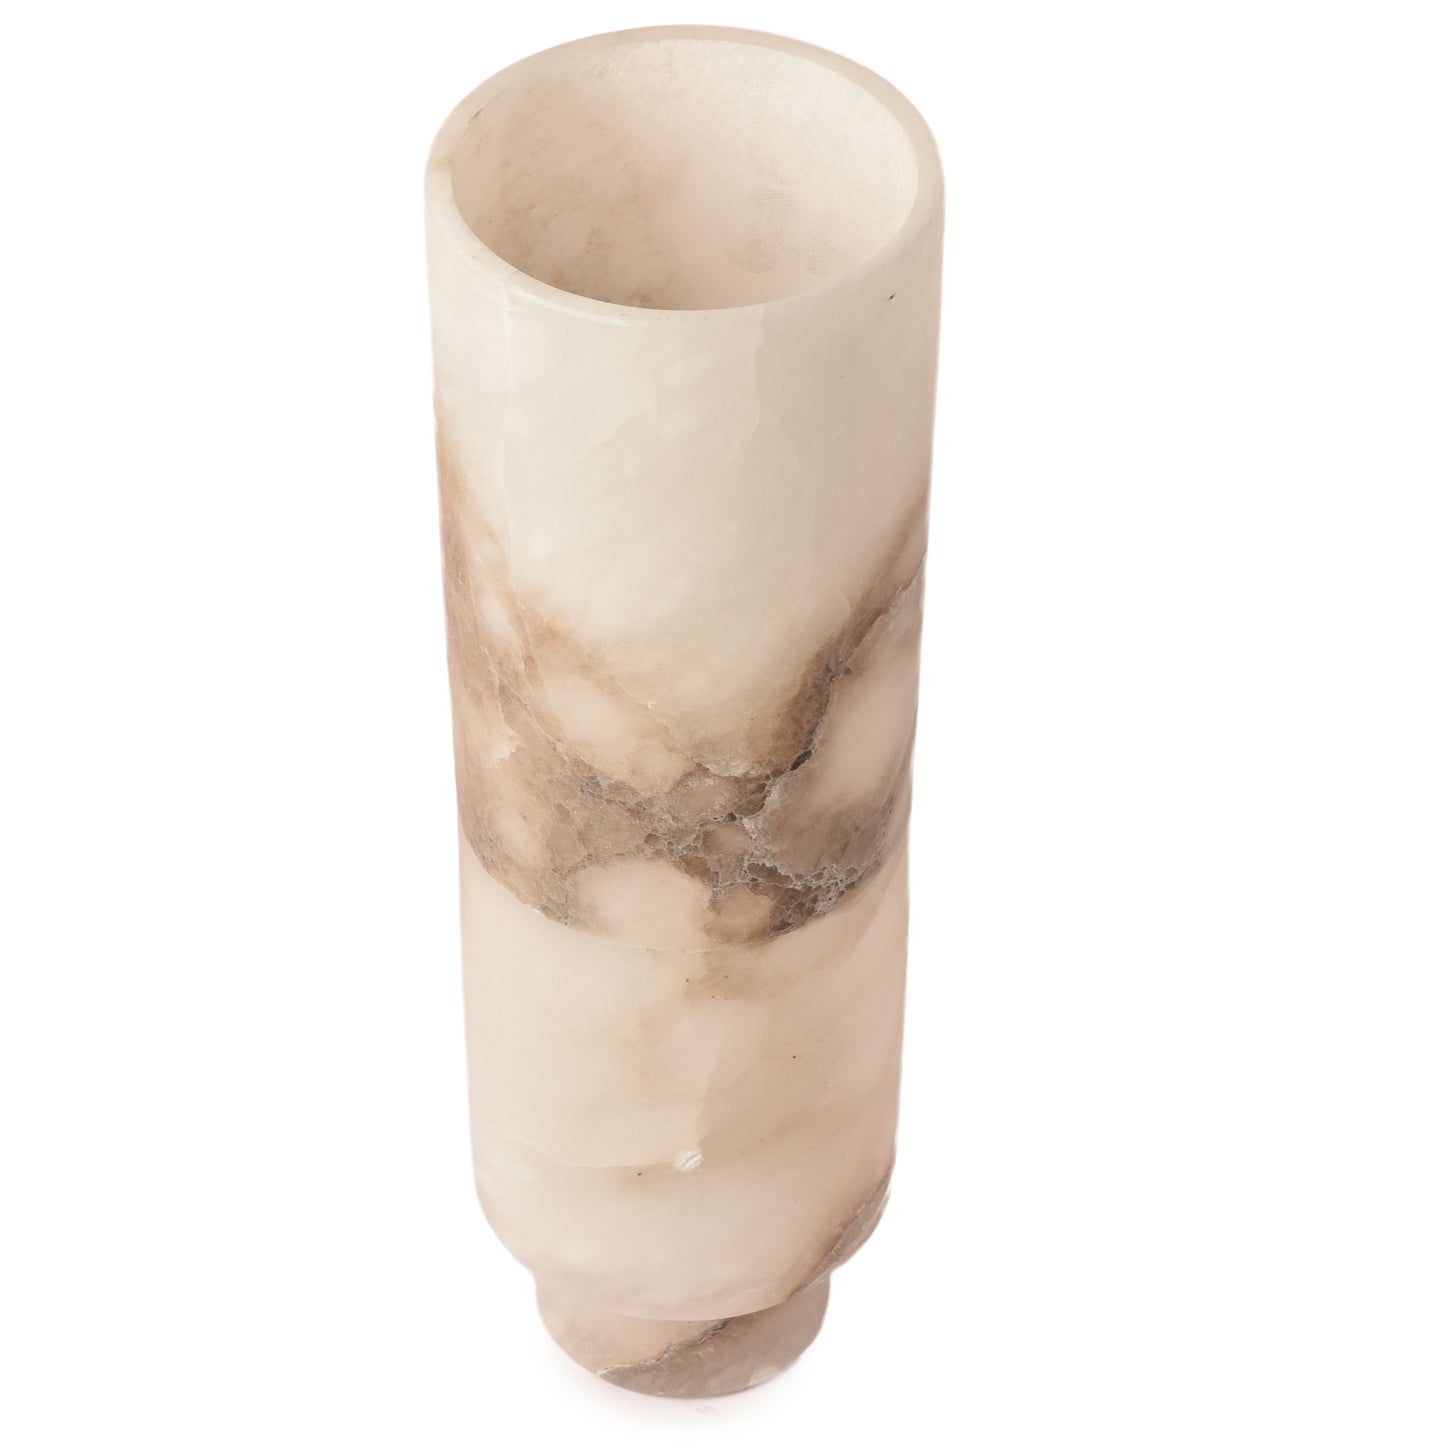 Long size ceamy colour Vase-HOMENEARTH